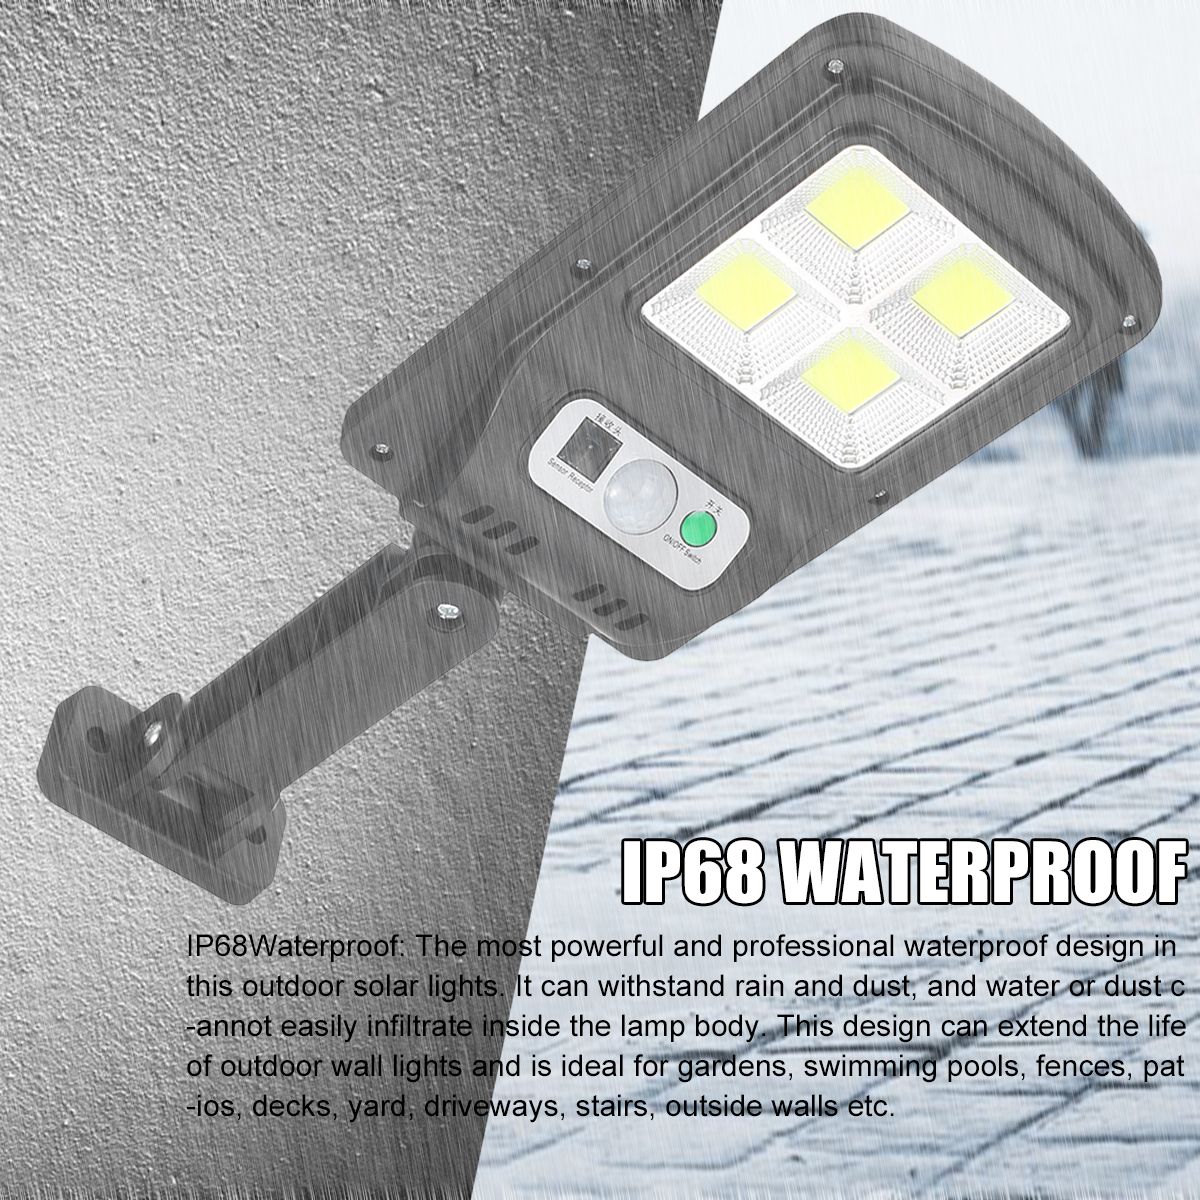 LED-Solar-Street-Wall-Light-PIR-Motion-Sensor-Outdoor-Garden-Waterproof-COB-Lamp-with-Remote-Control-1735067